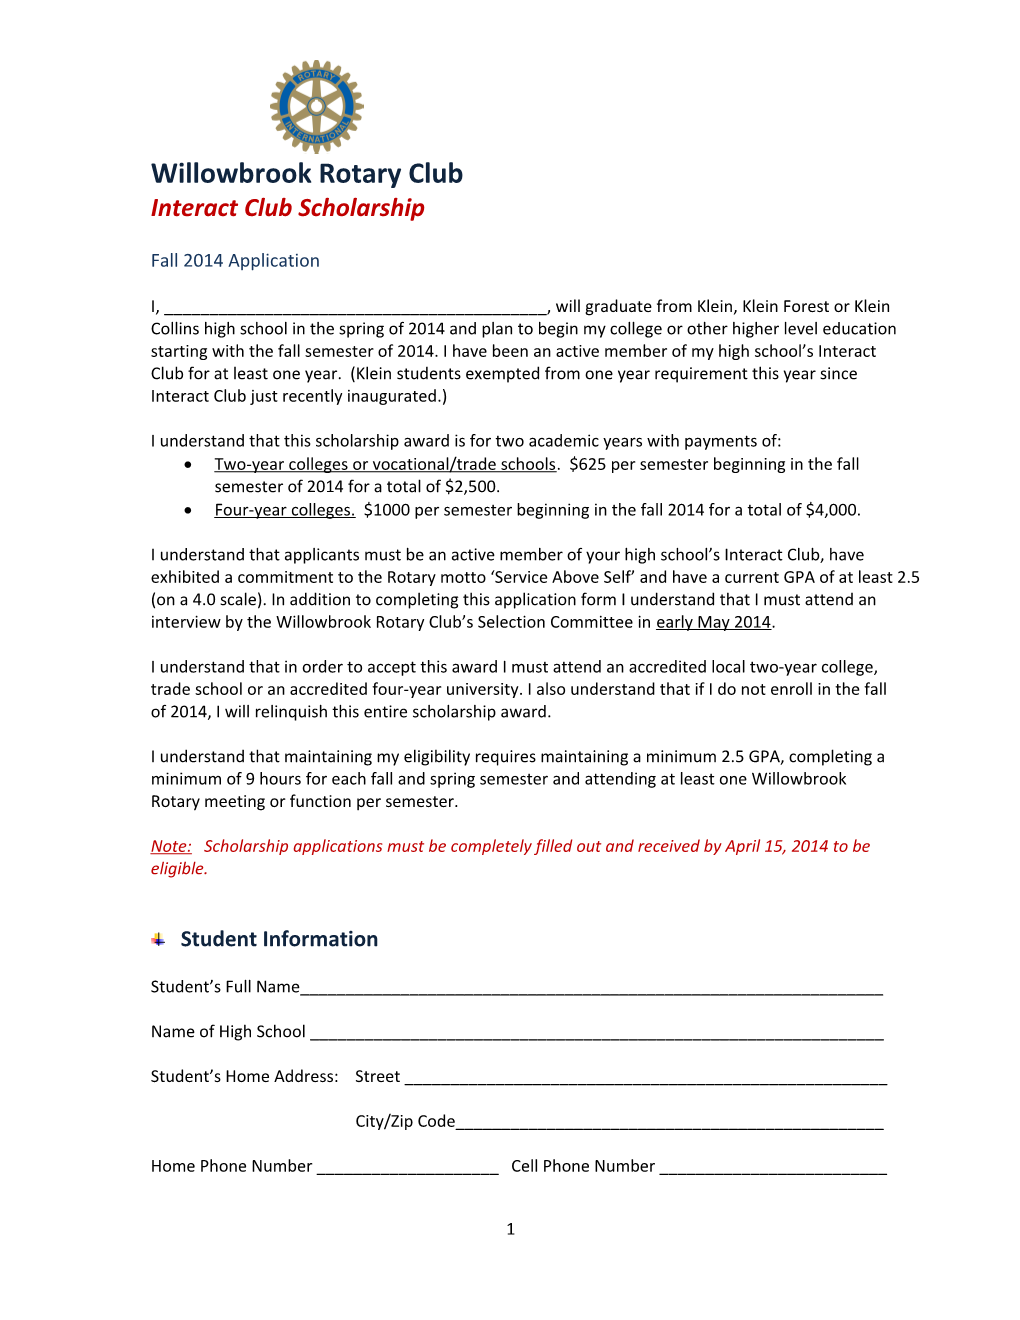 Willowbrook Rotary Foundation Scholarship